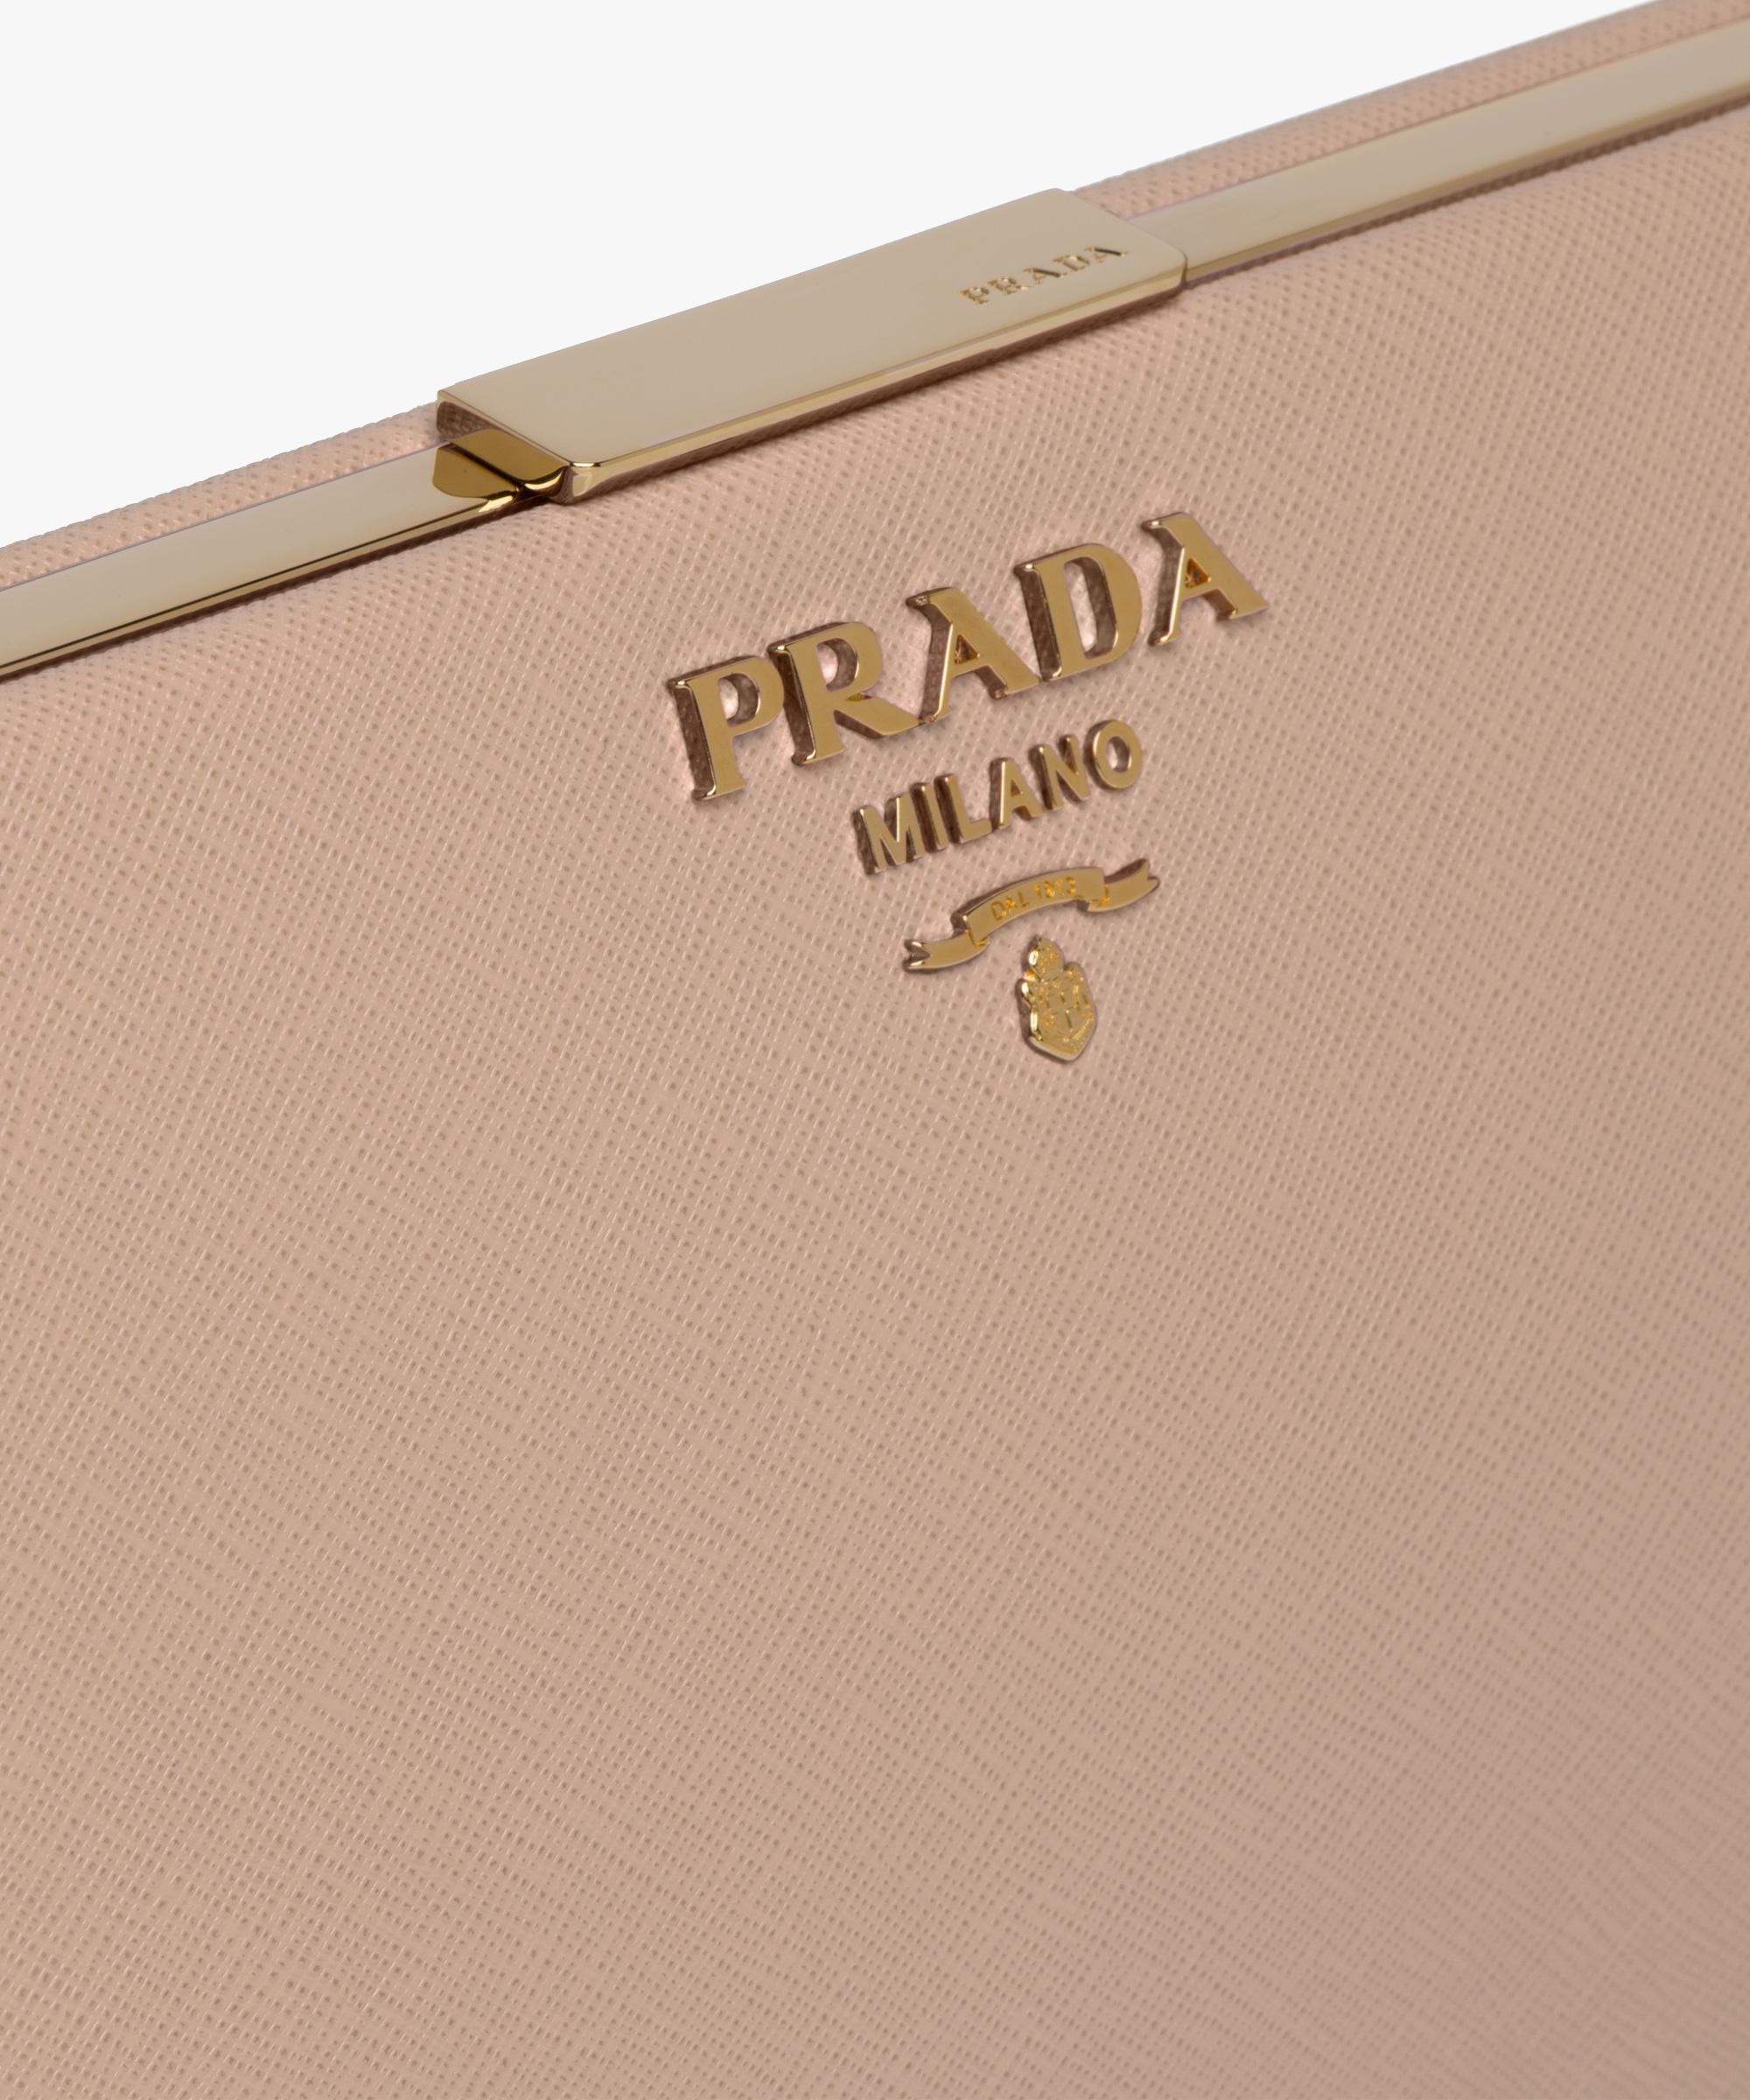 Light frame leather handbag Prada Camel in Leather - 31707193